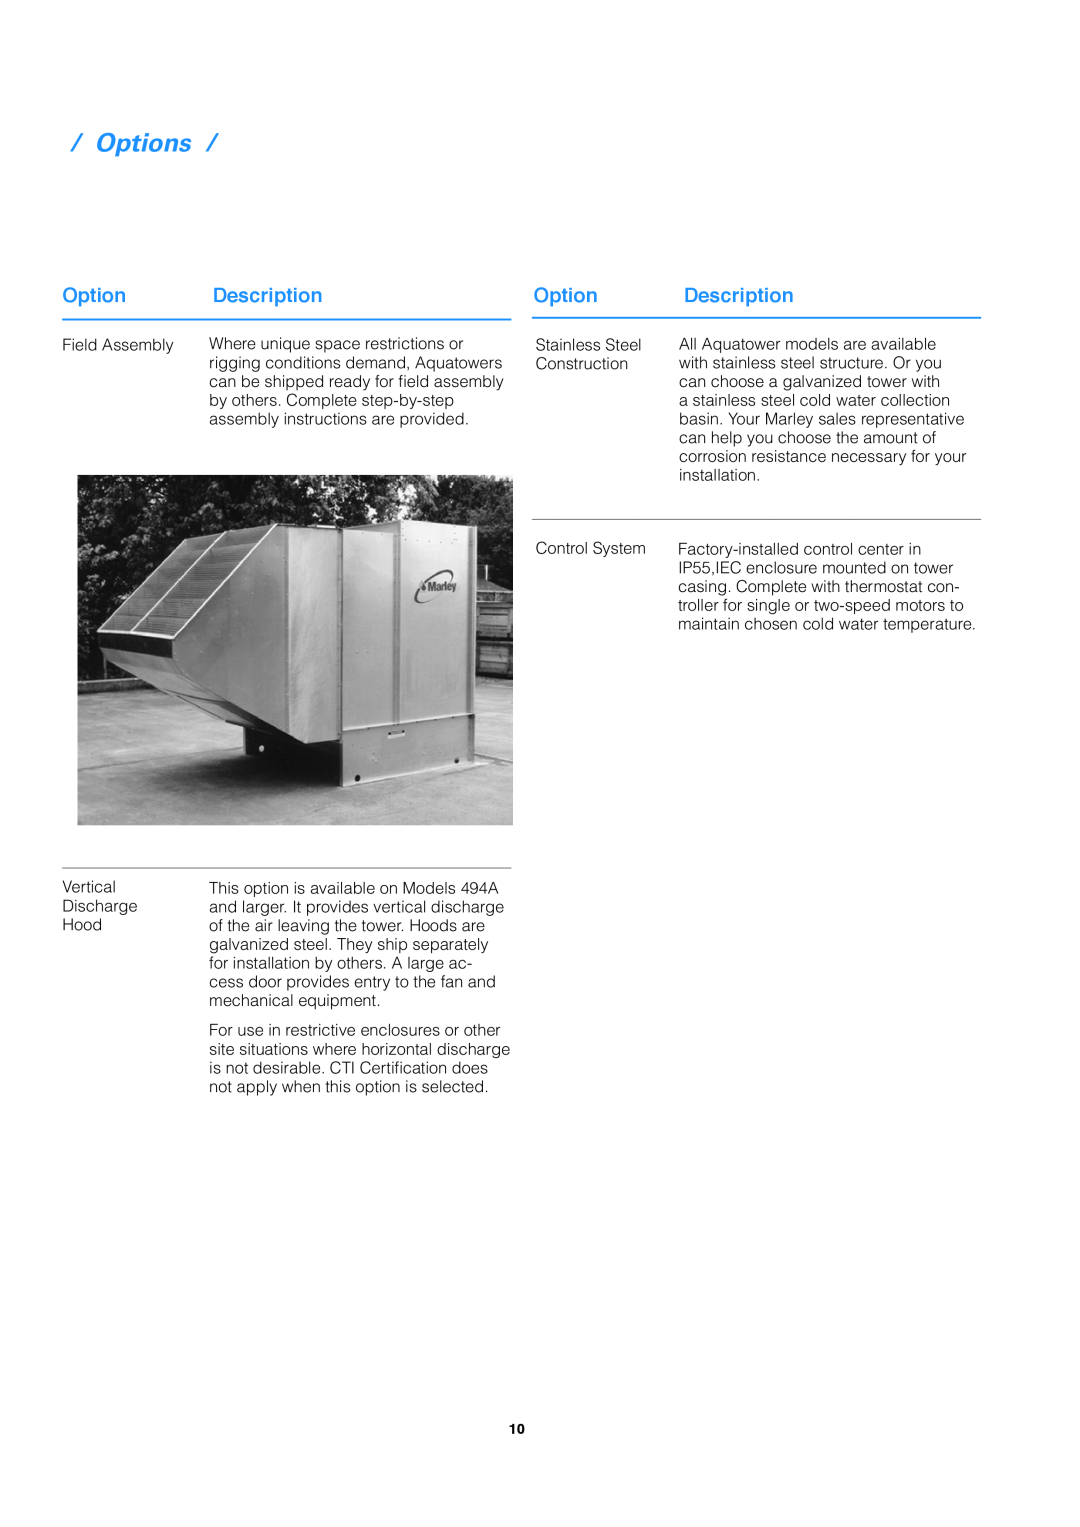 SPX Cooling Technologies Marley Aquatower manual Options, Description 